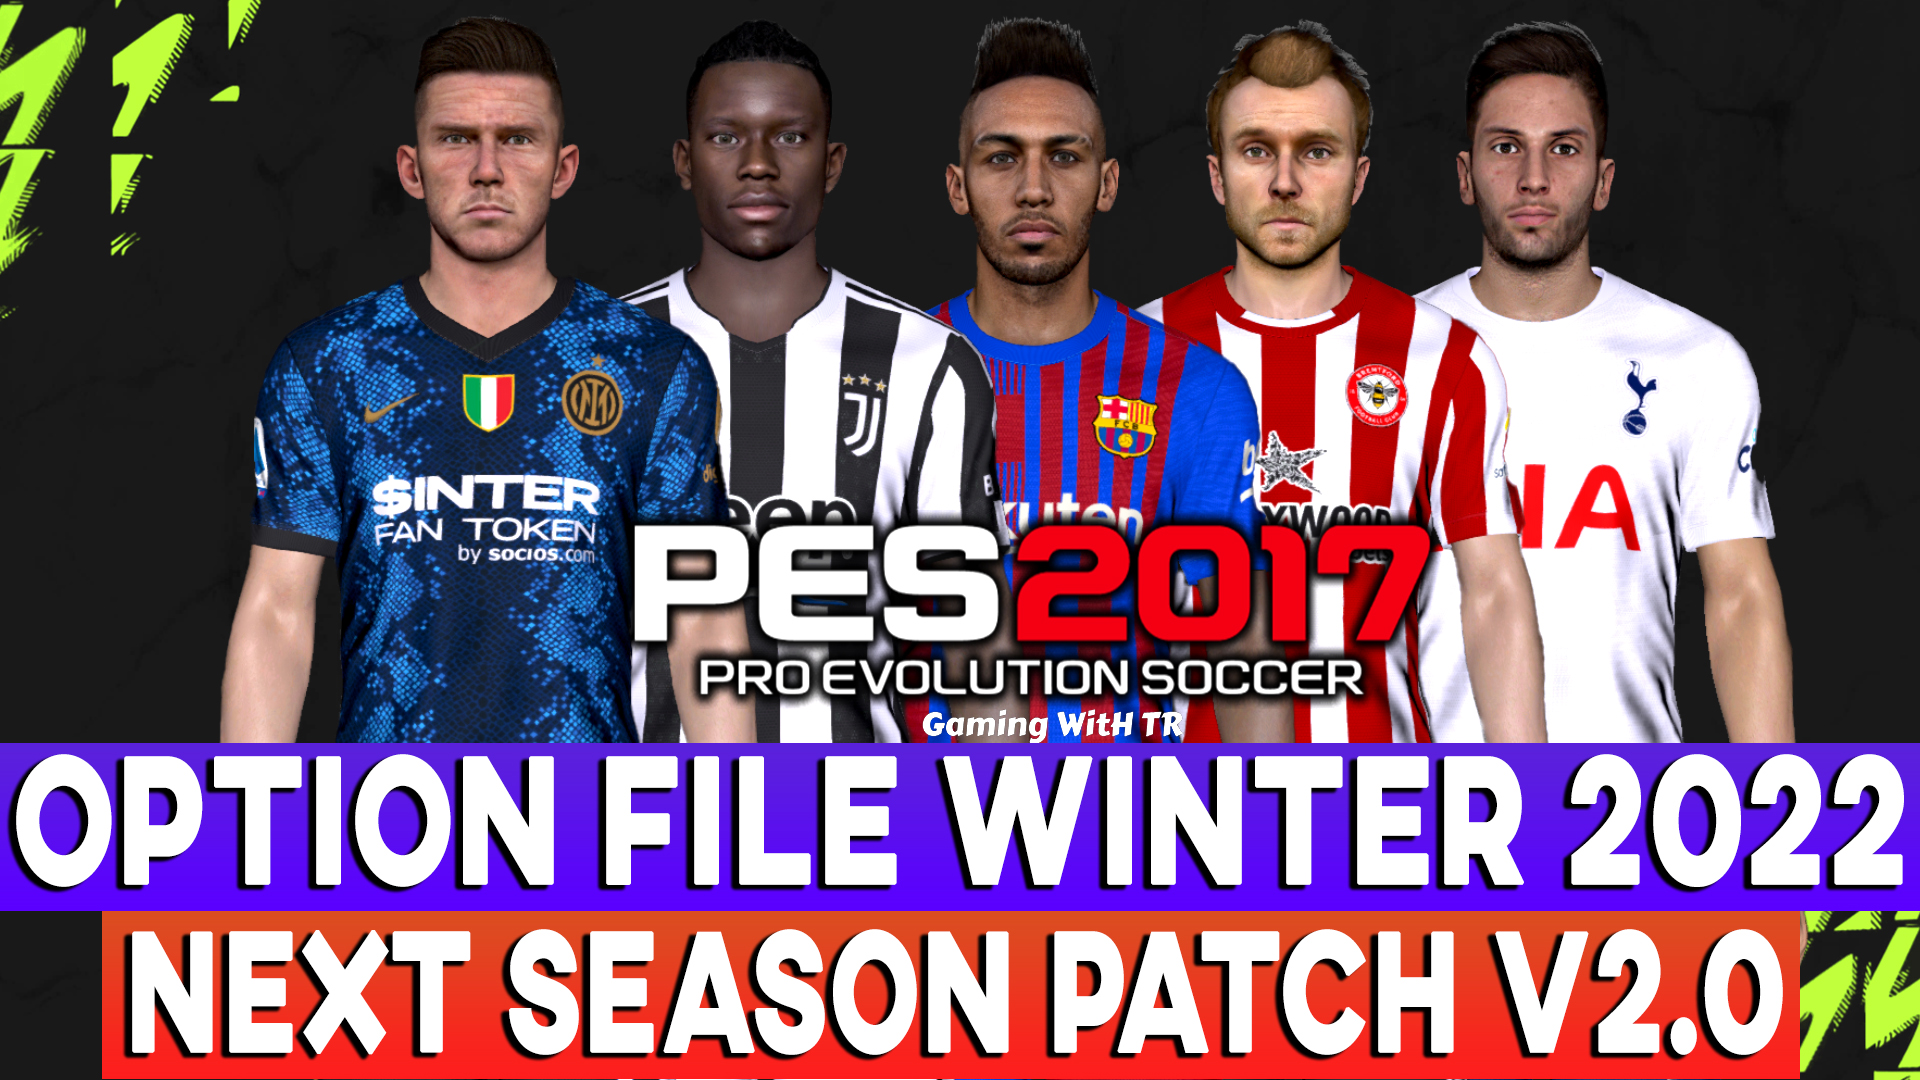 PES 2017 | New Option File Next Season Patch V2 Winter 2022